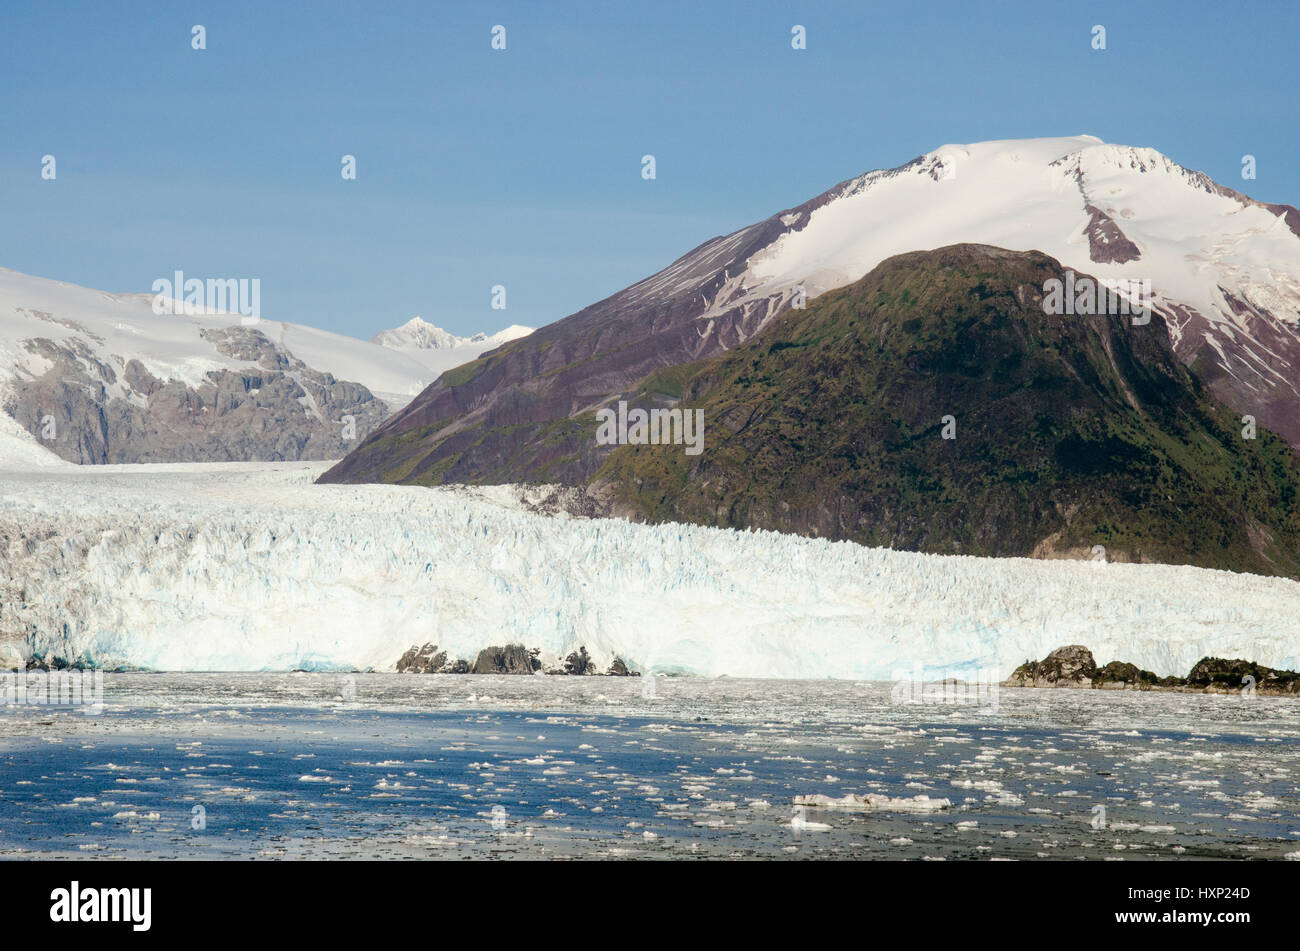 Chile - Amalia Glacier On The Edge Of The Sarmiento Channel - Skua Glacier - Bernardo O'Higgins National Park Stock Photo